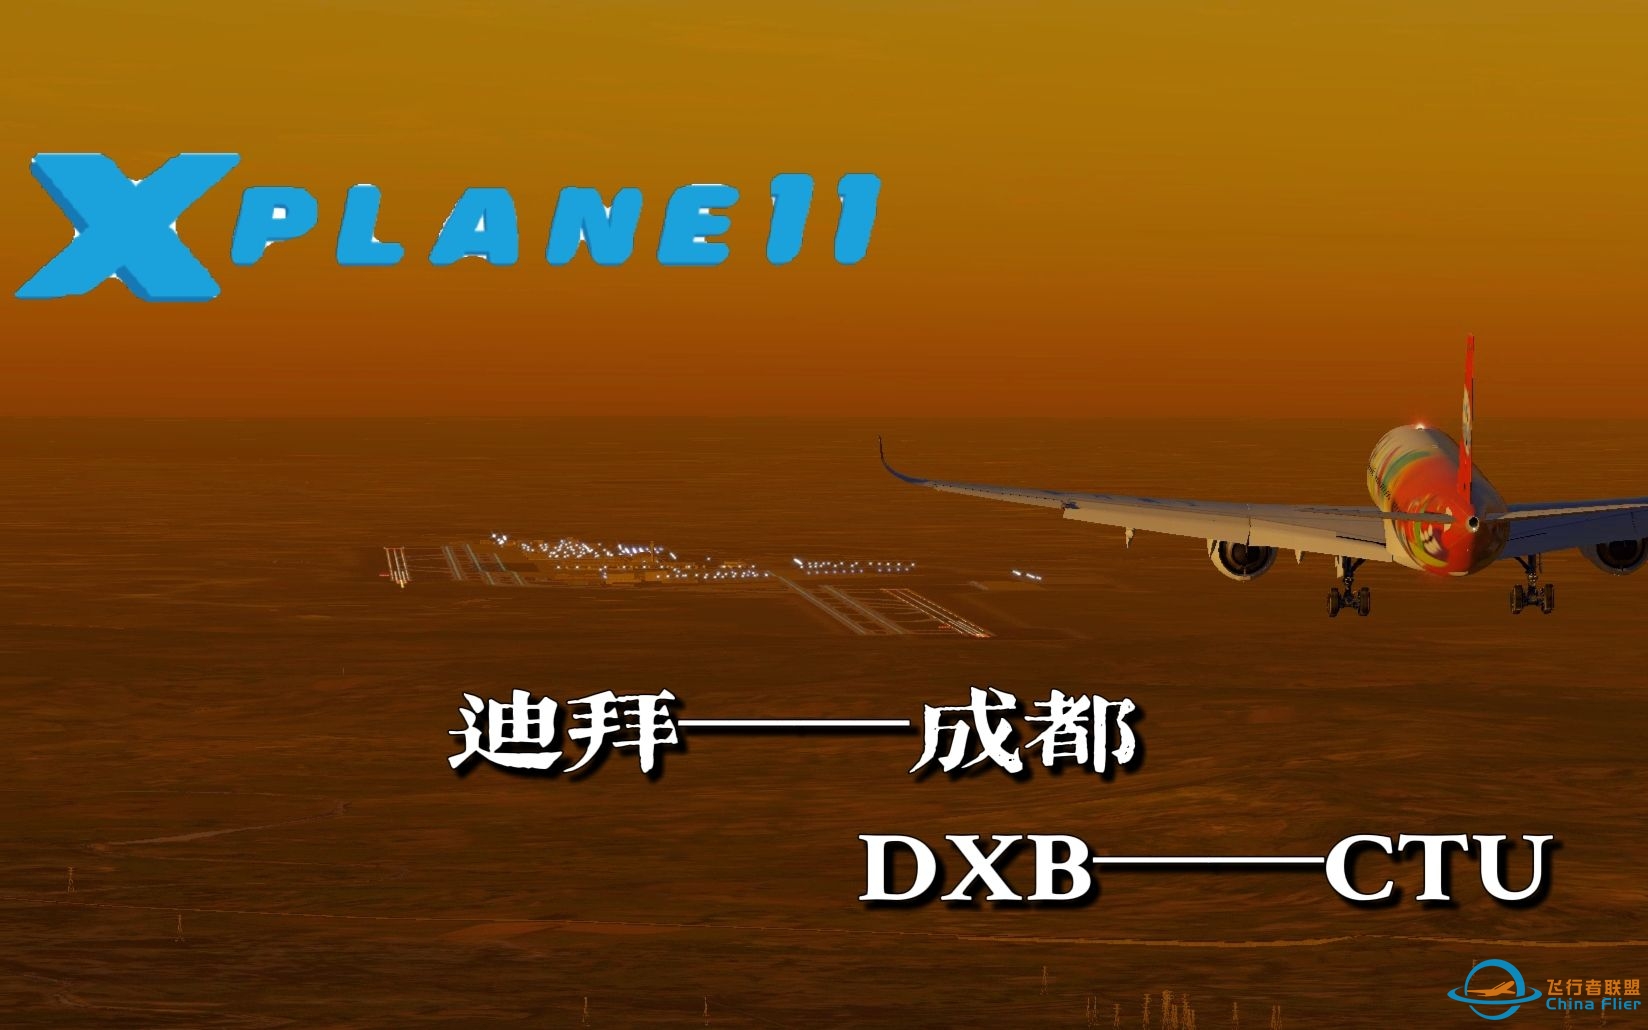 【X-PLANE11】迪拜成都！墨镜侠！双人机组贺岁洲际飞行记录-2415 